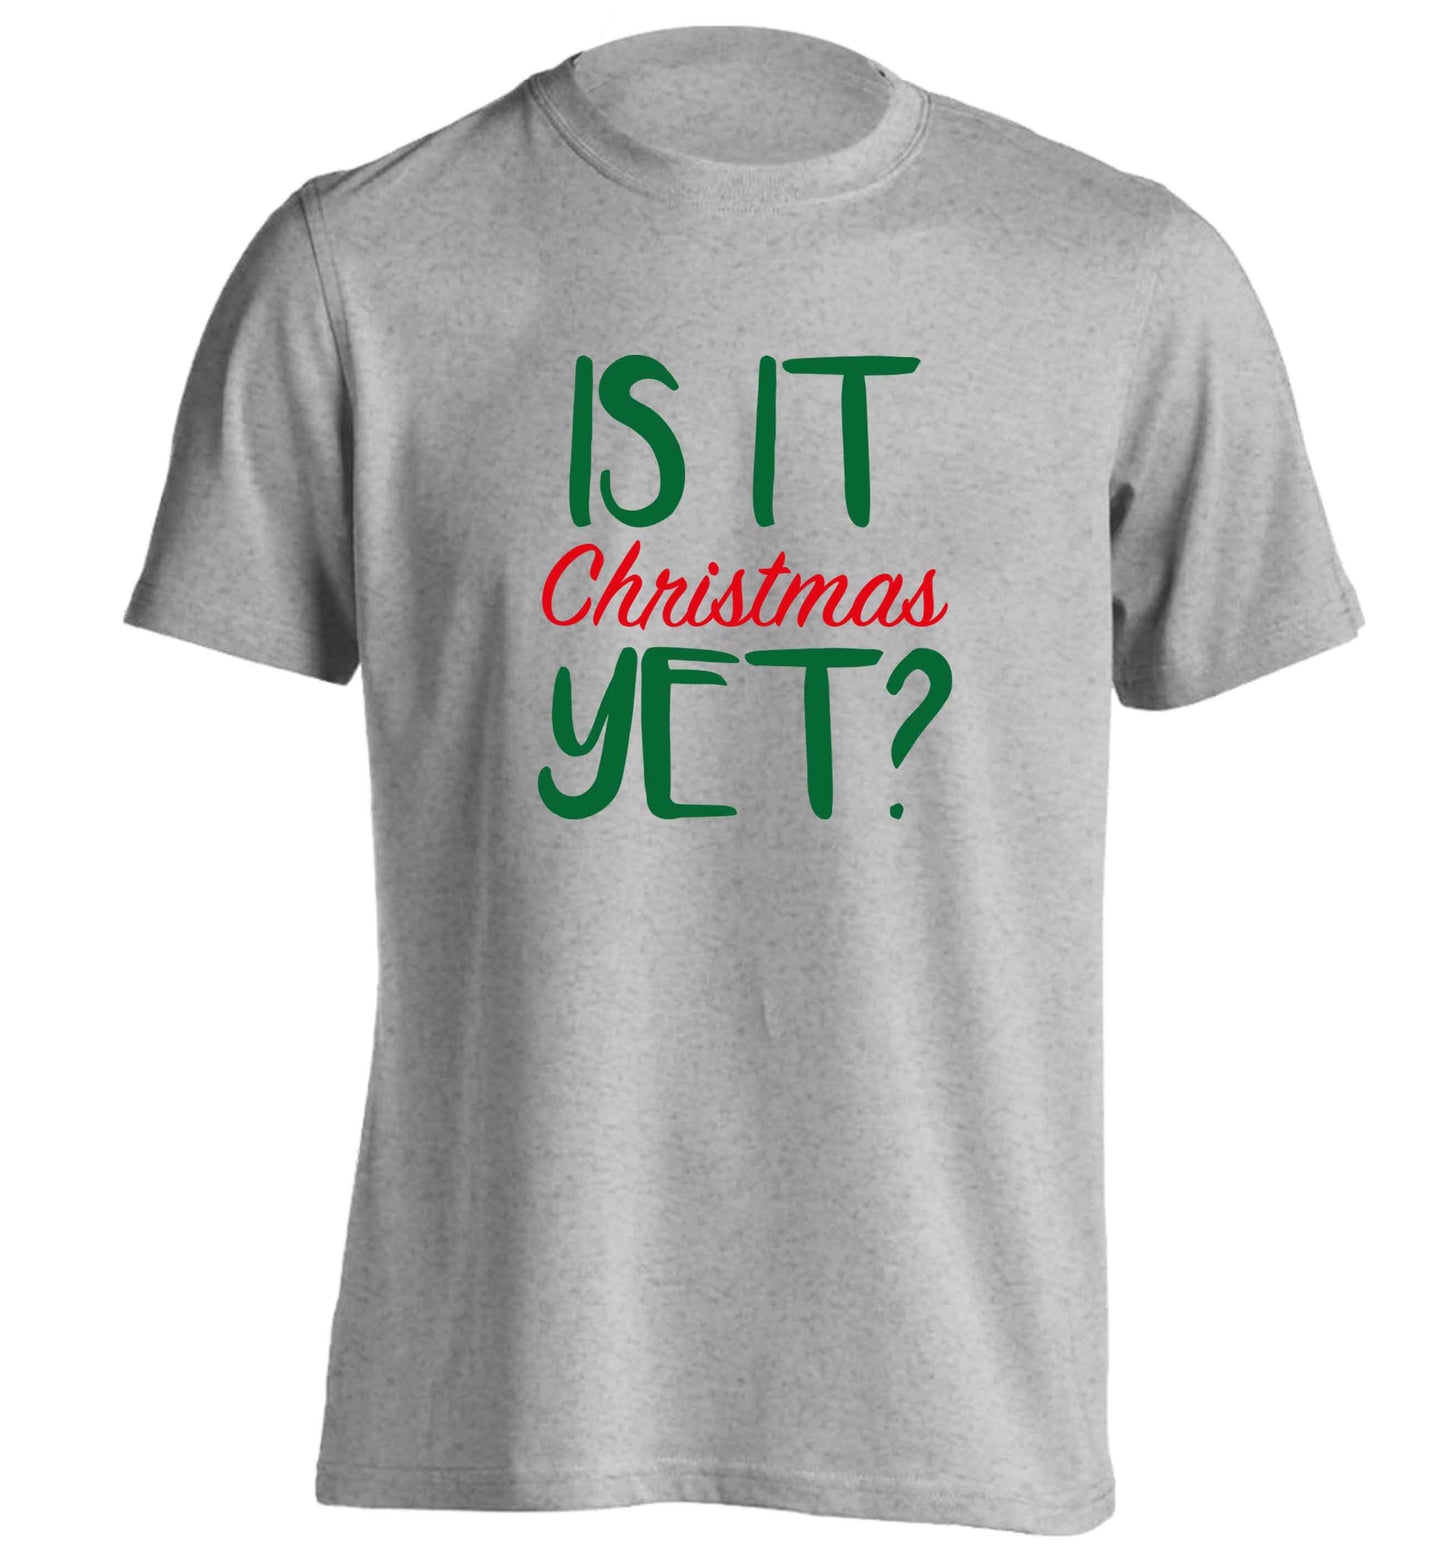 Is it Christmas yet? adults unisex grey Tshirt 2XL